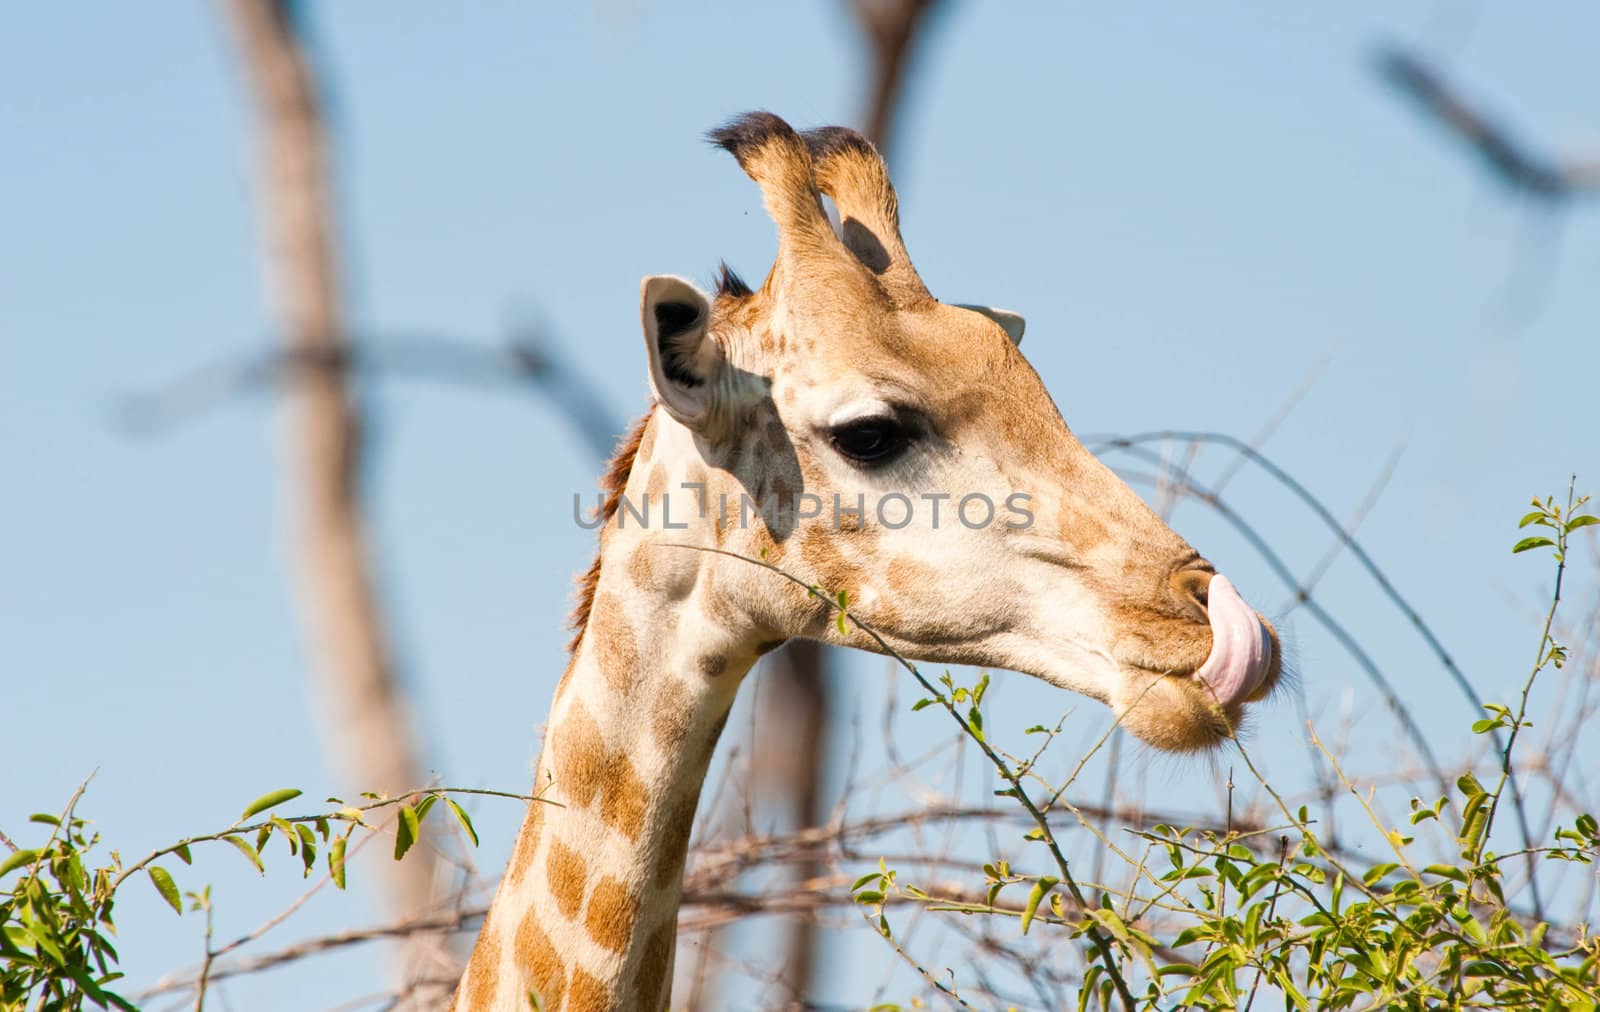 Giraffe (Giraffa camelopardalis) licking lips, Chobe National Park, Botswana